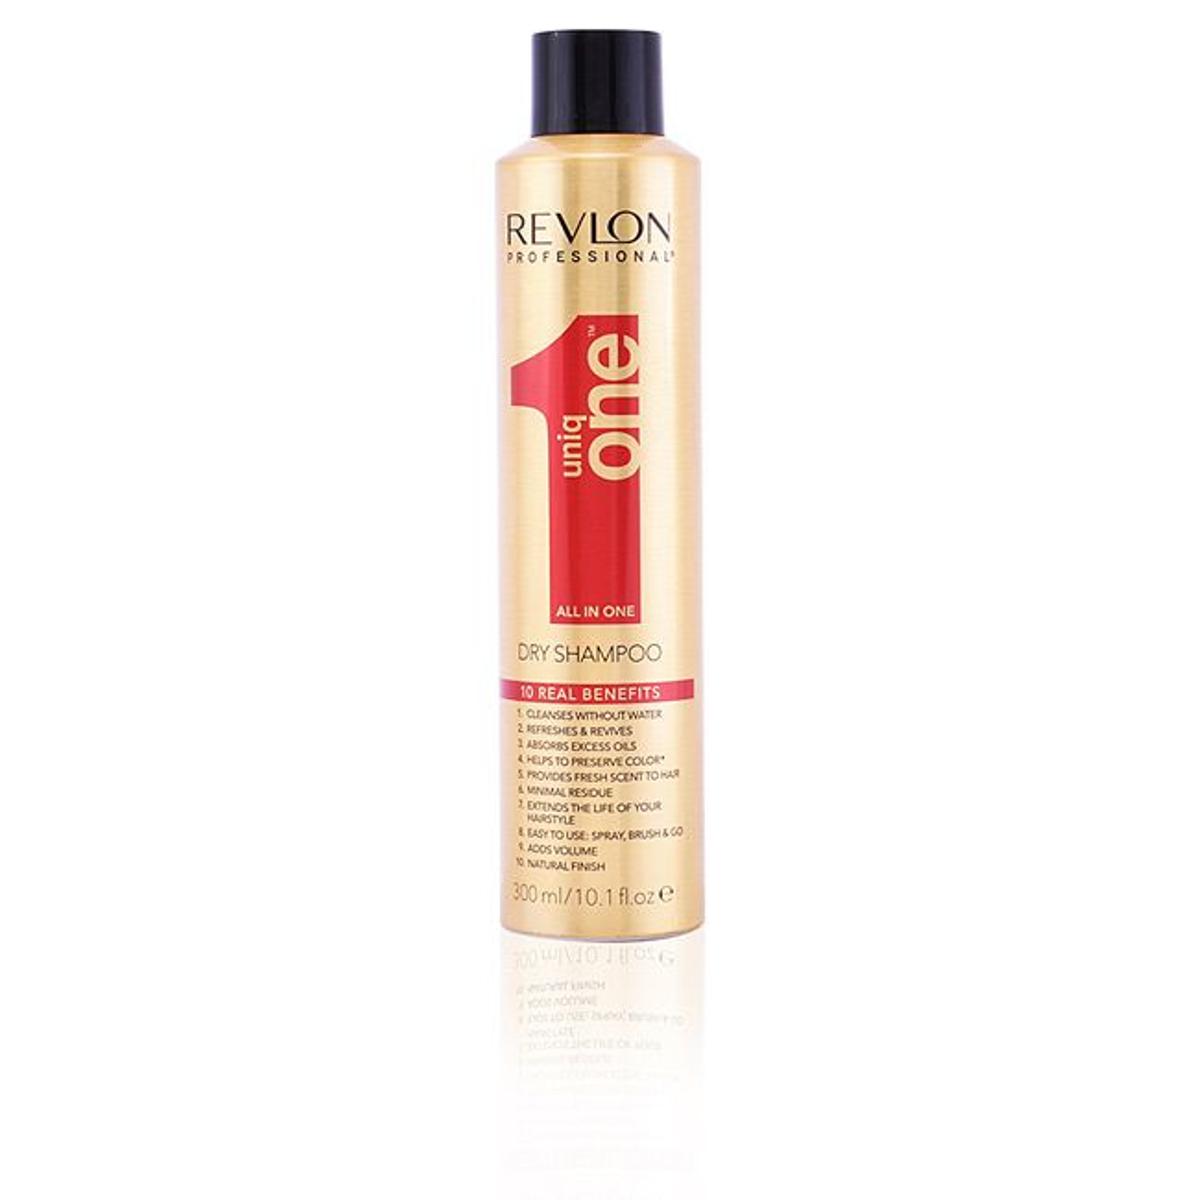 Para el cabello: Dry Shampoo UNIQ ONE, de Revlon